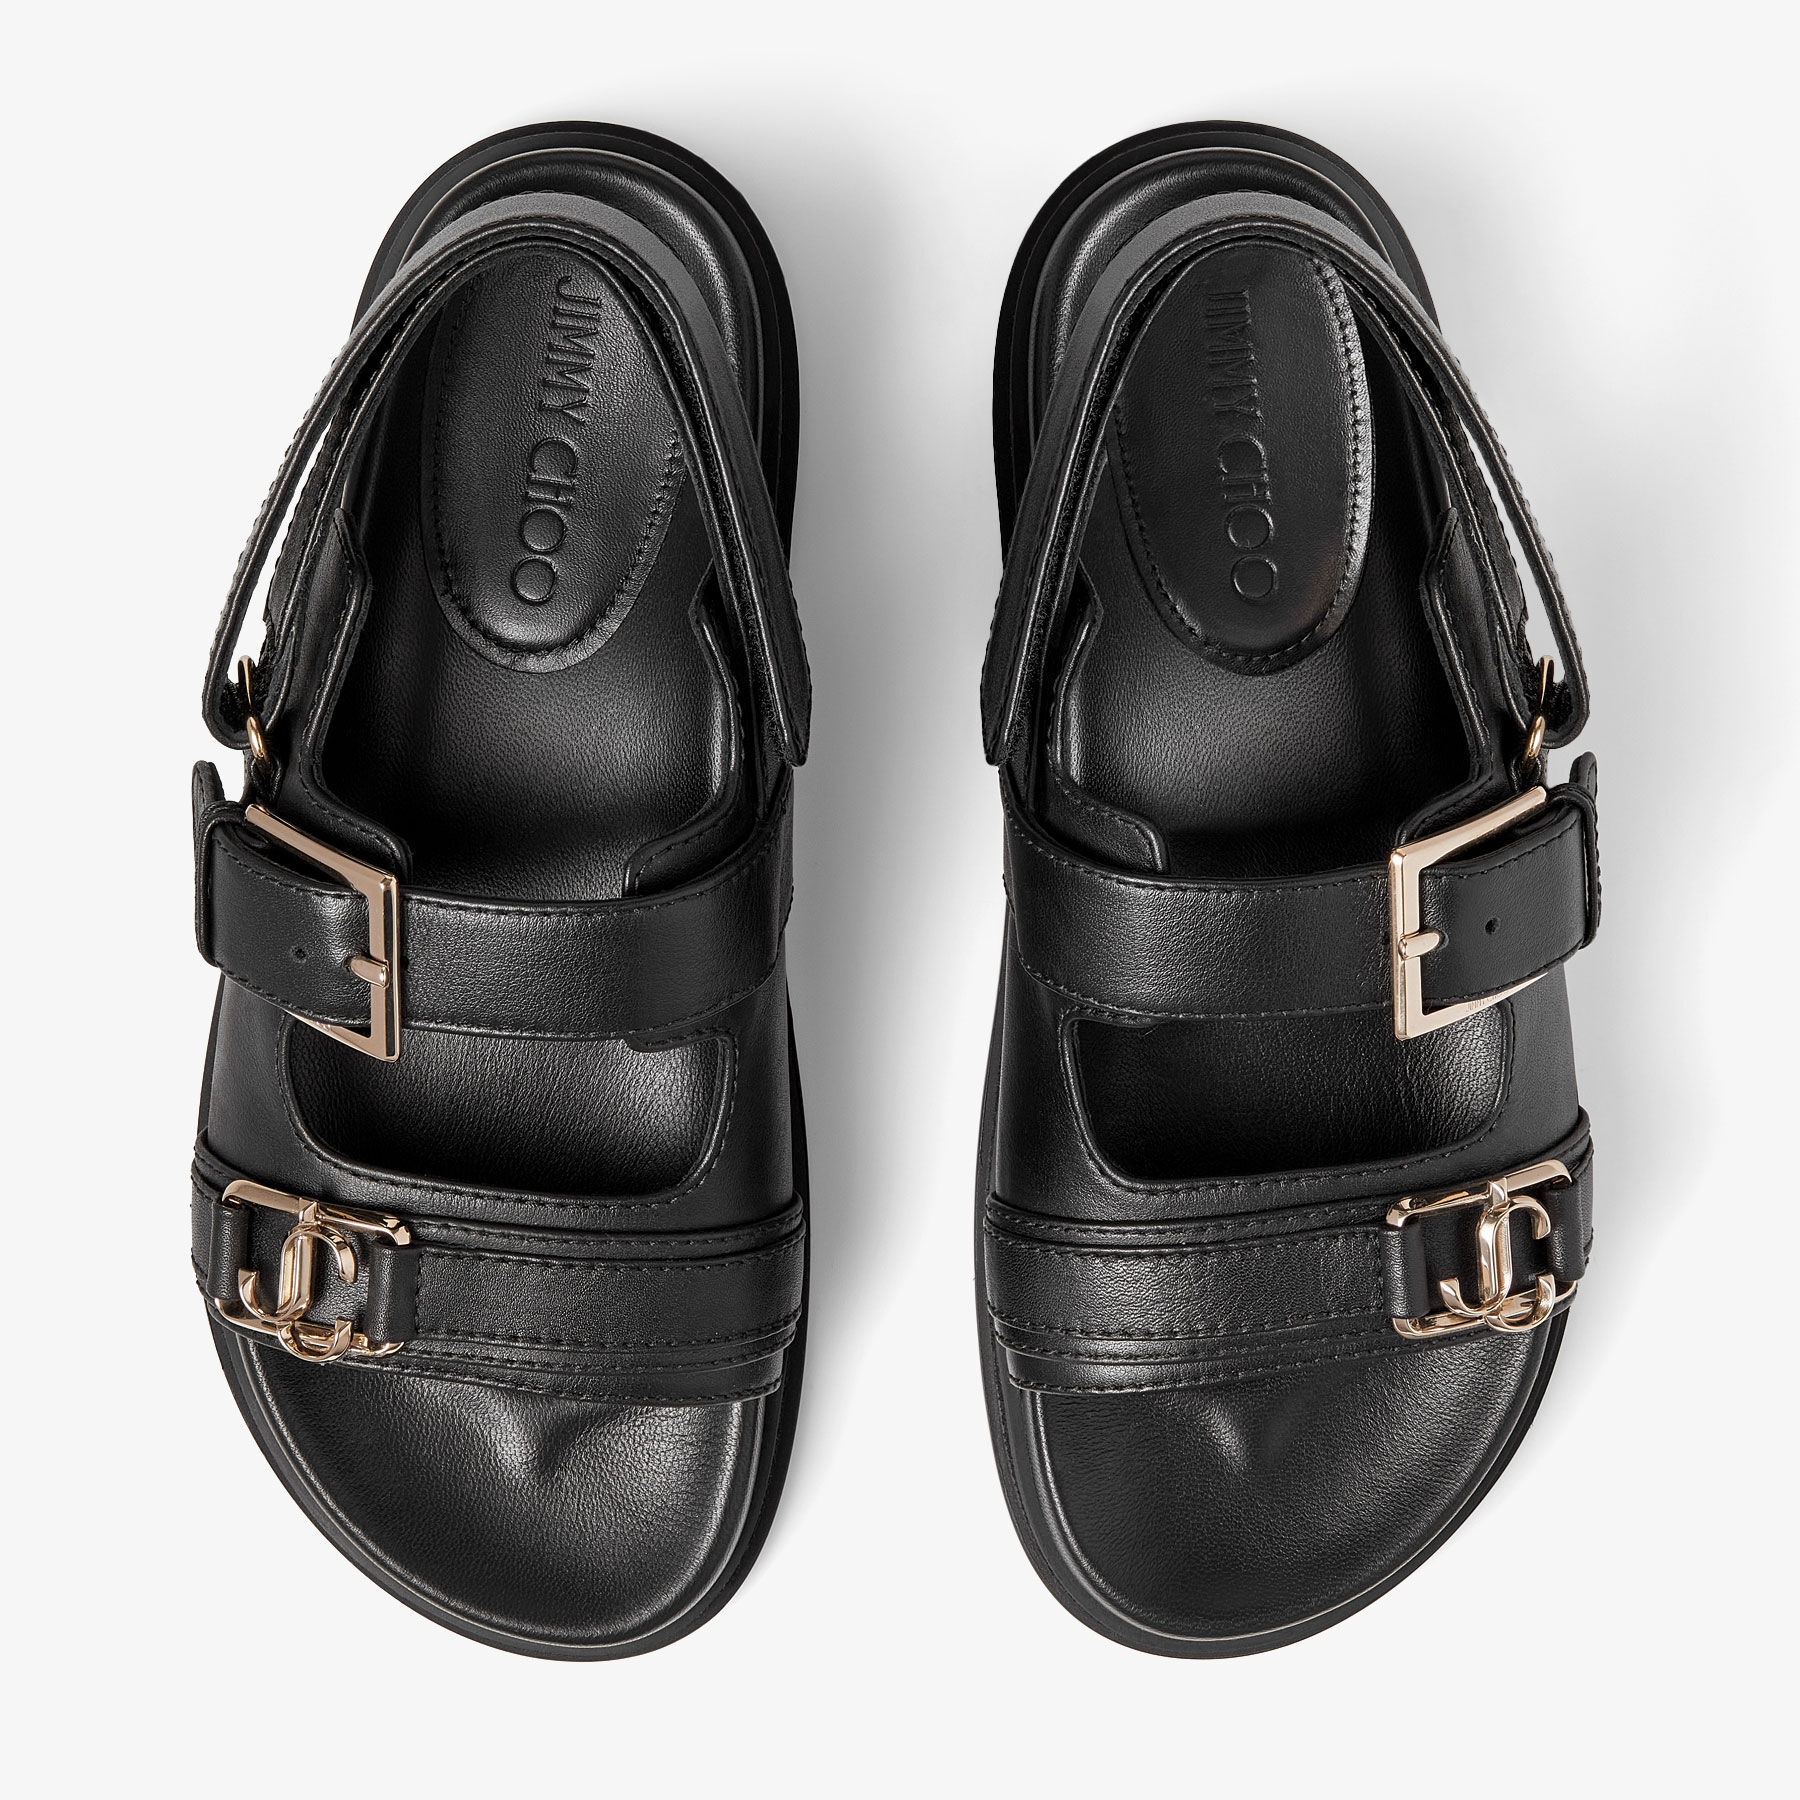 Elyn Flat
Black Calf Leather Flat Sandals - 4